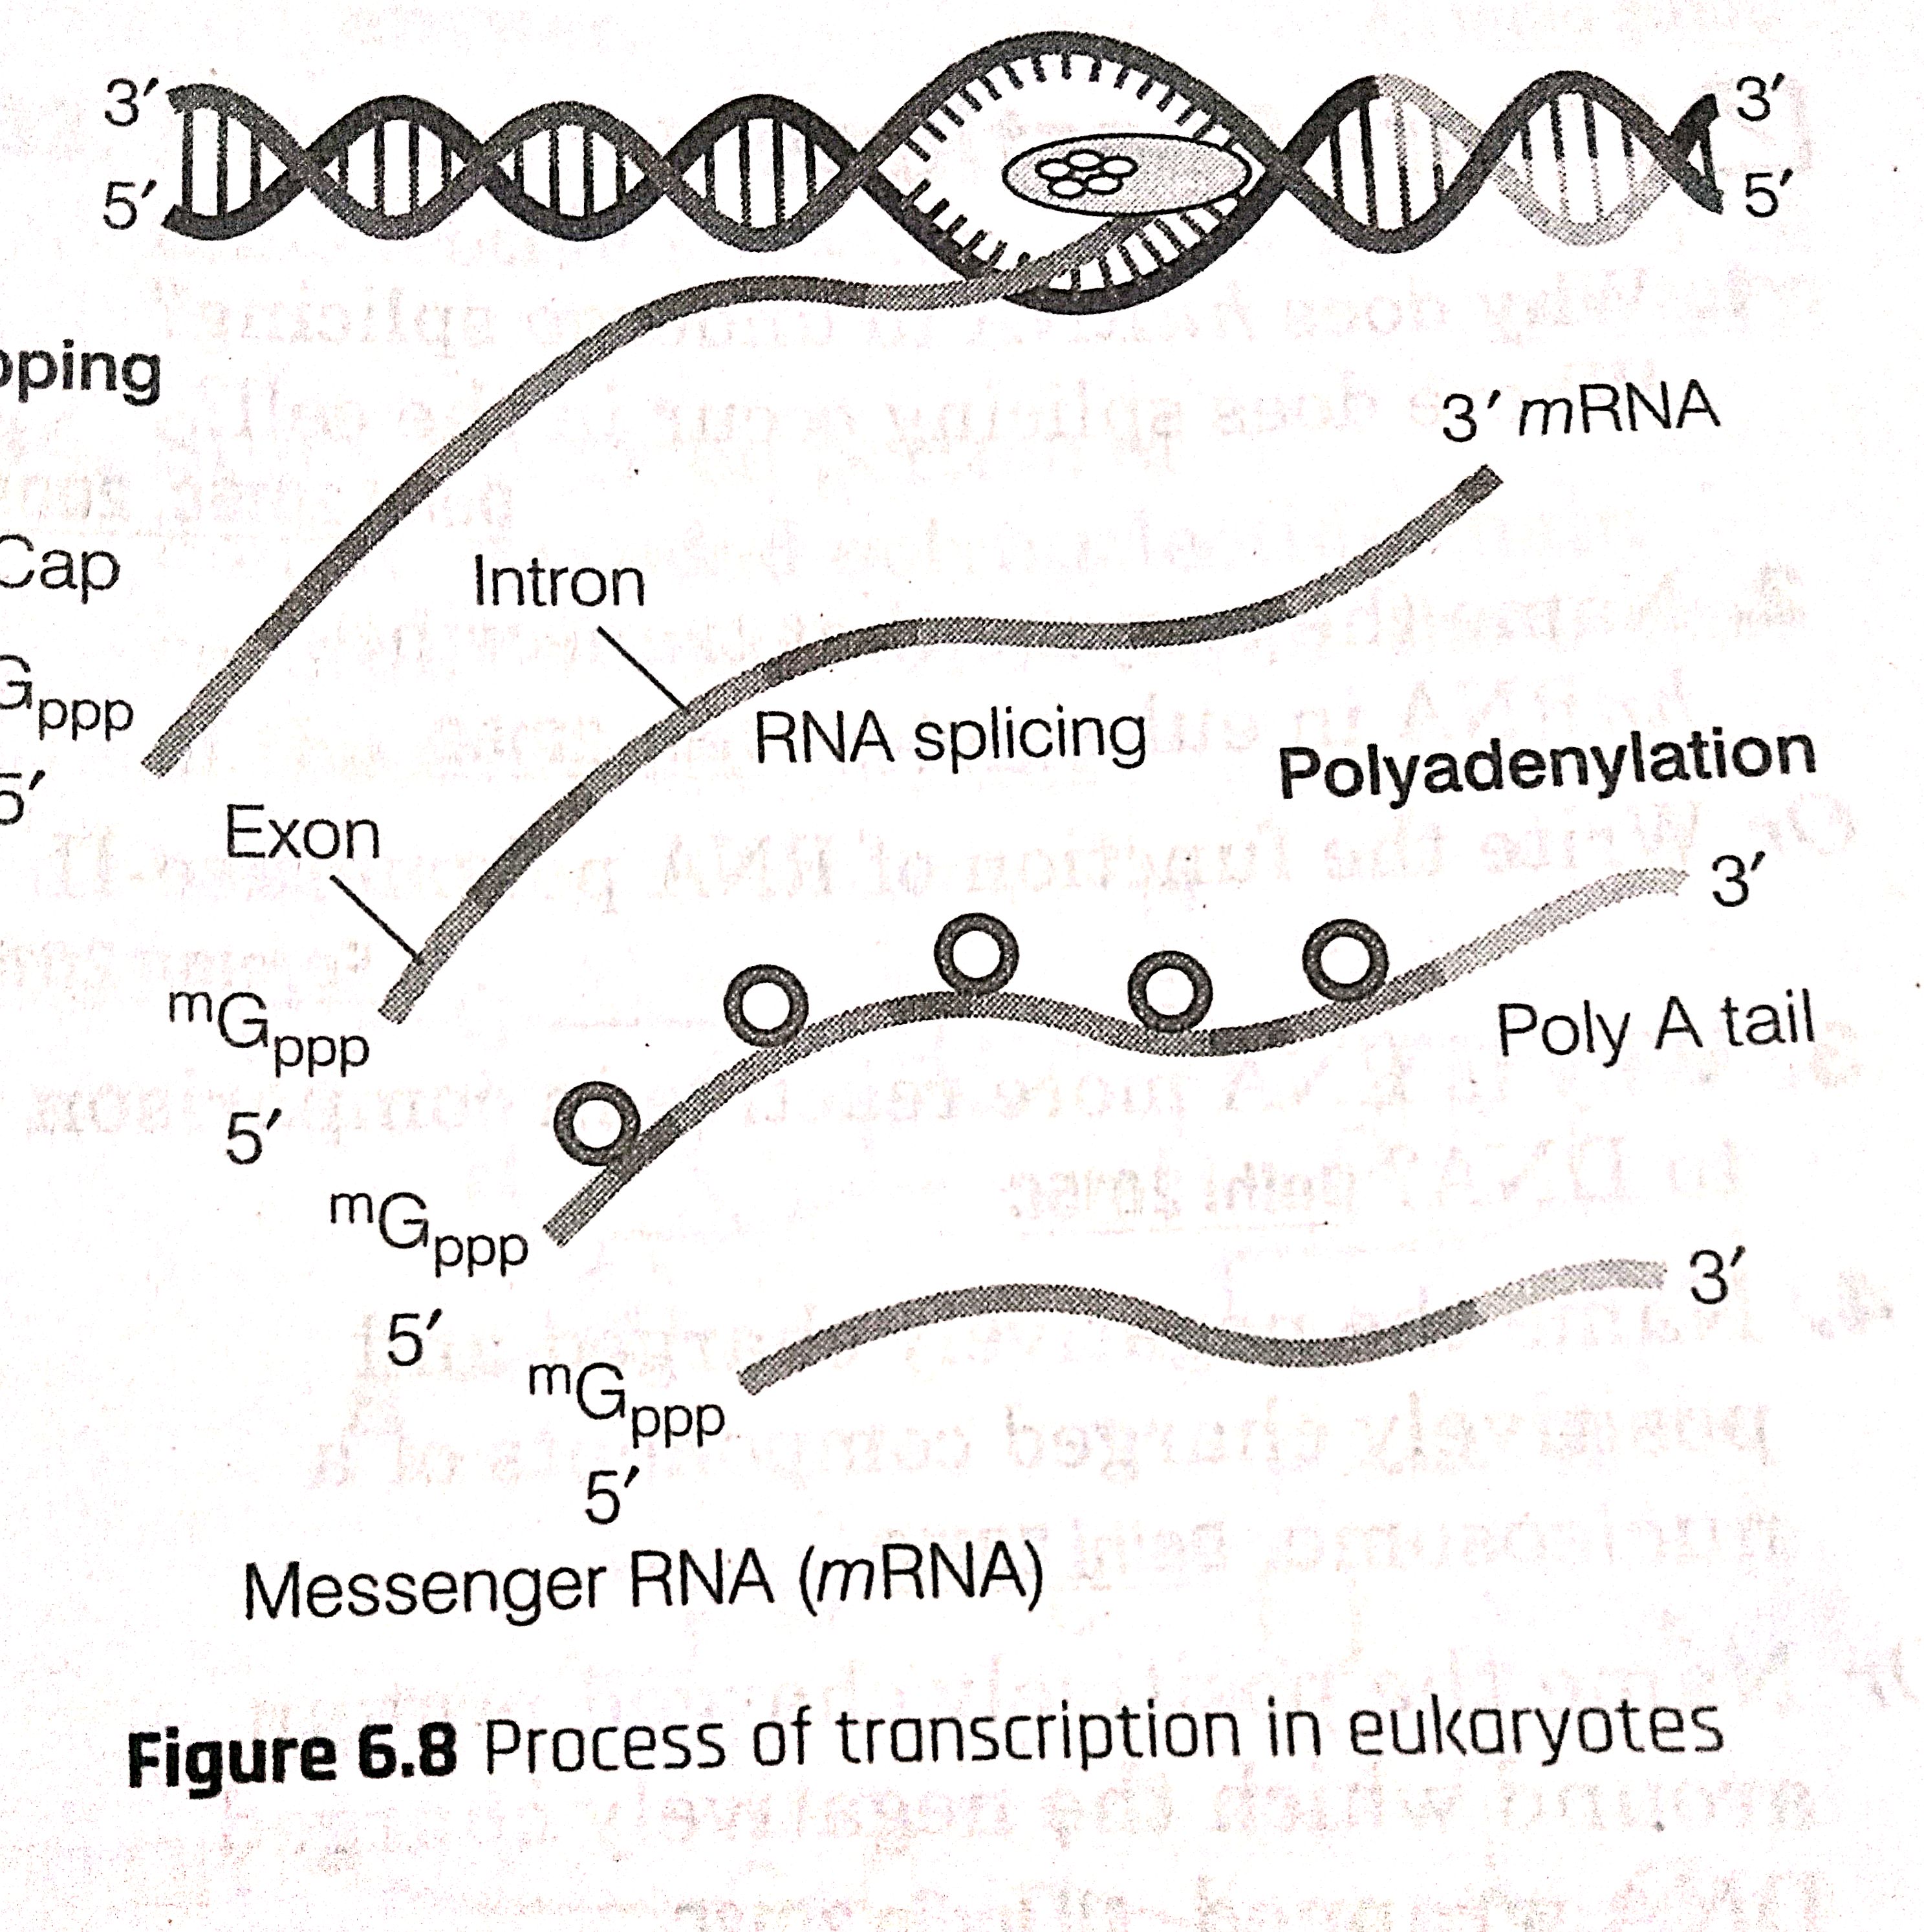 Diagrams from molecular basis of inheritance -New doc 18-Aug-2020 12.54-3.jpg